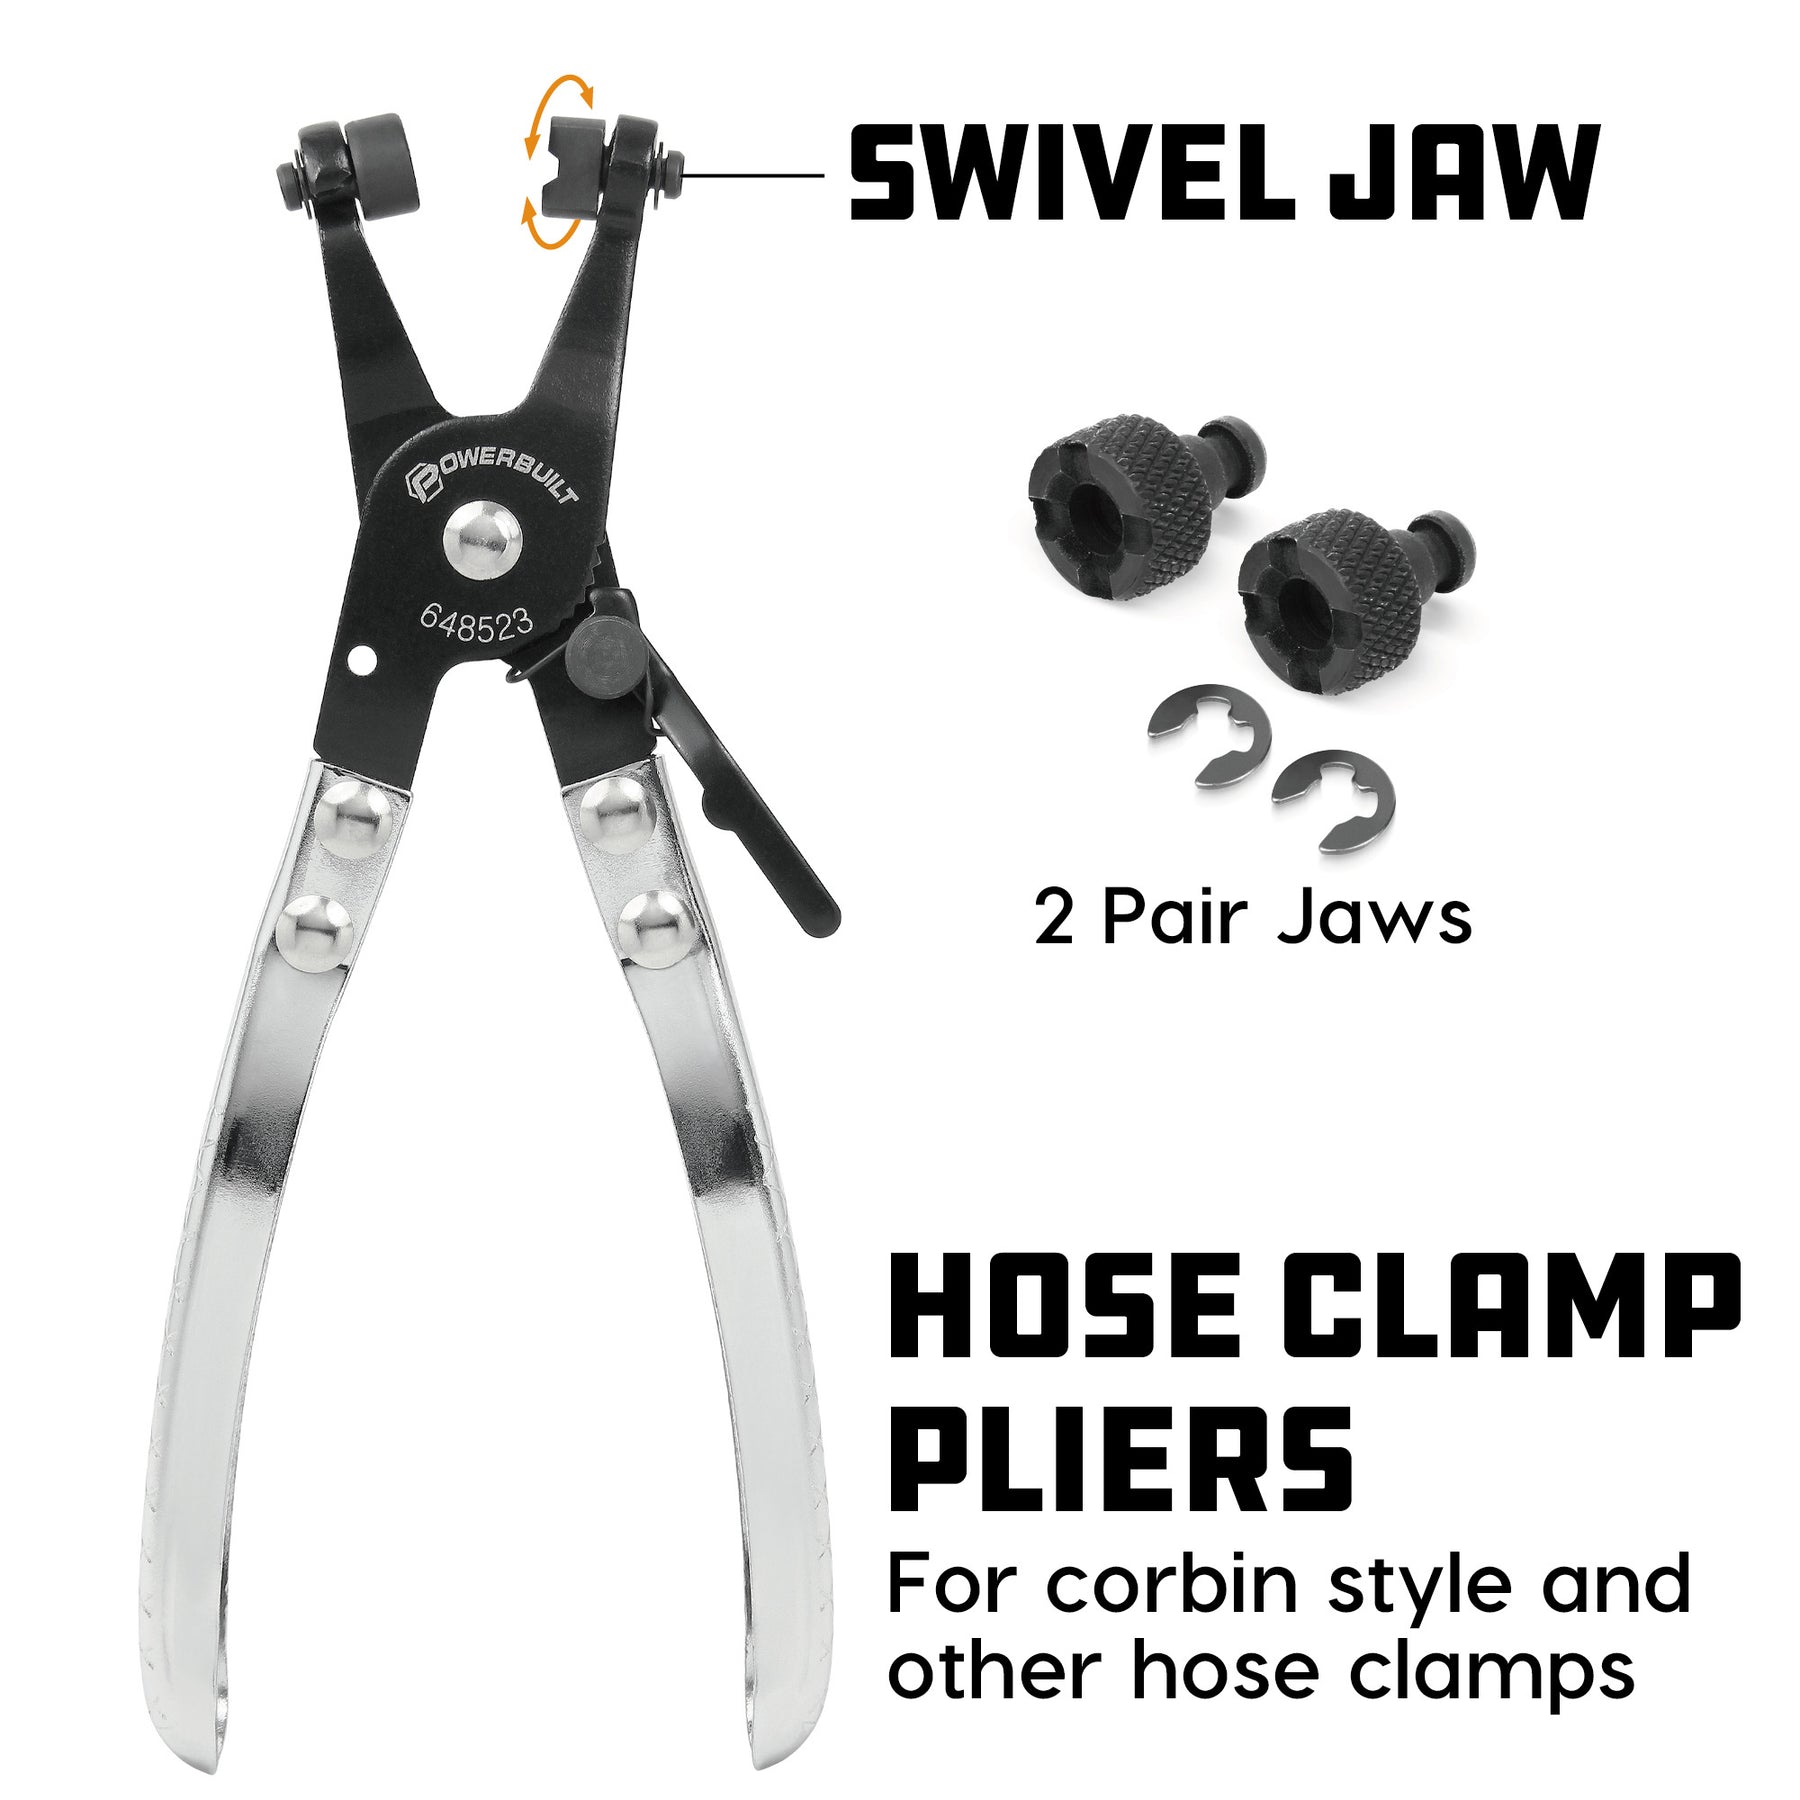 45° Universal Hose Clamp Pliers - Cal-Van Tools